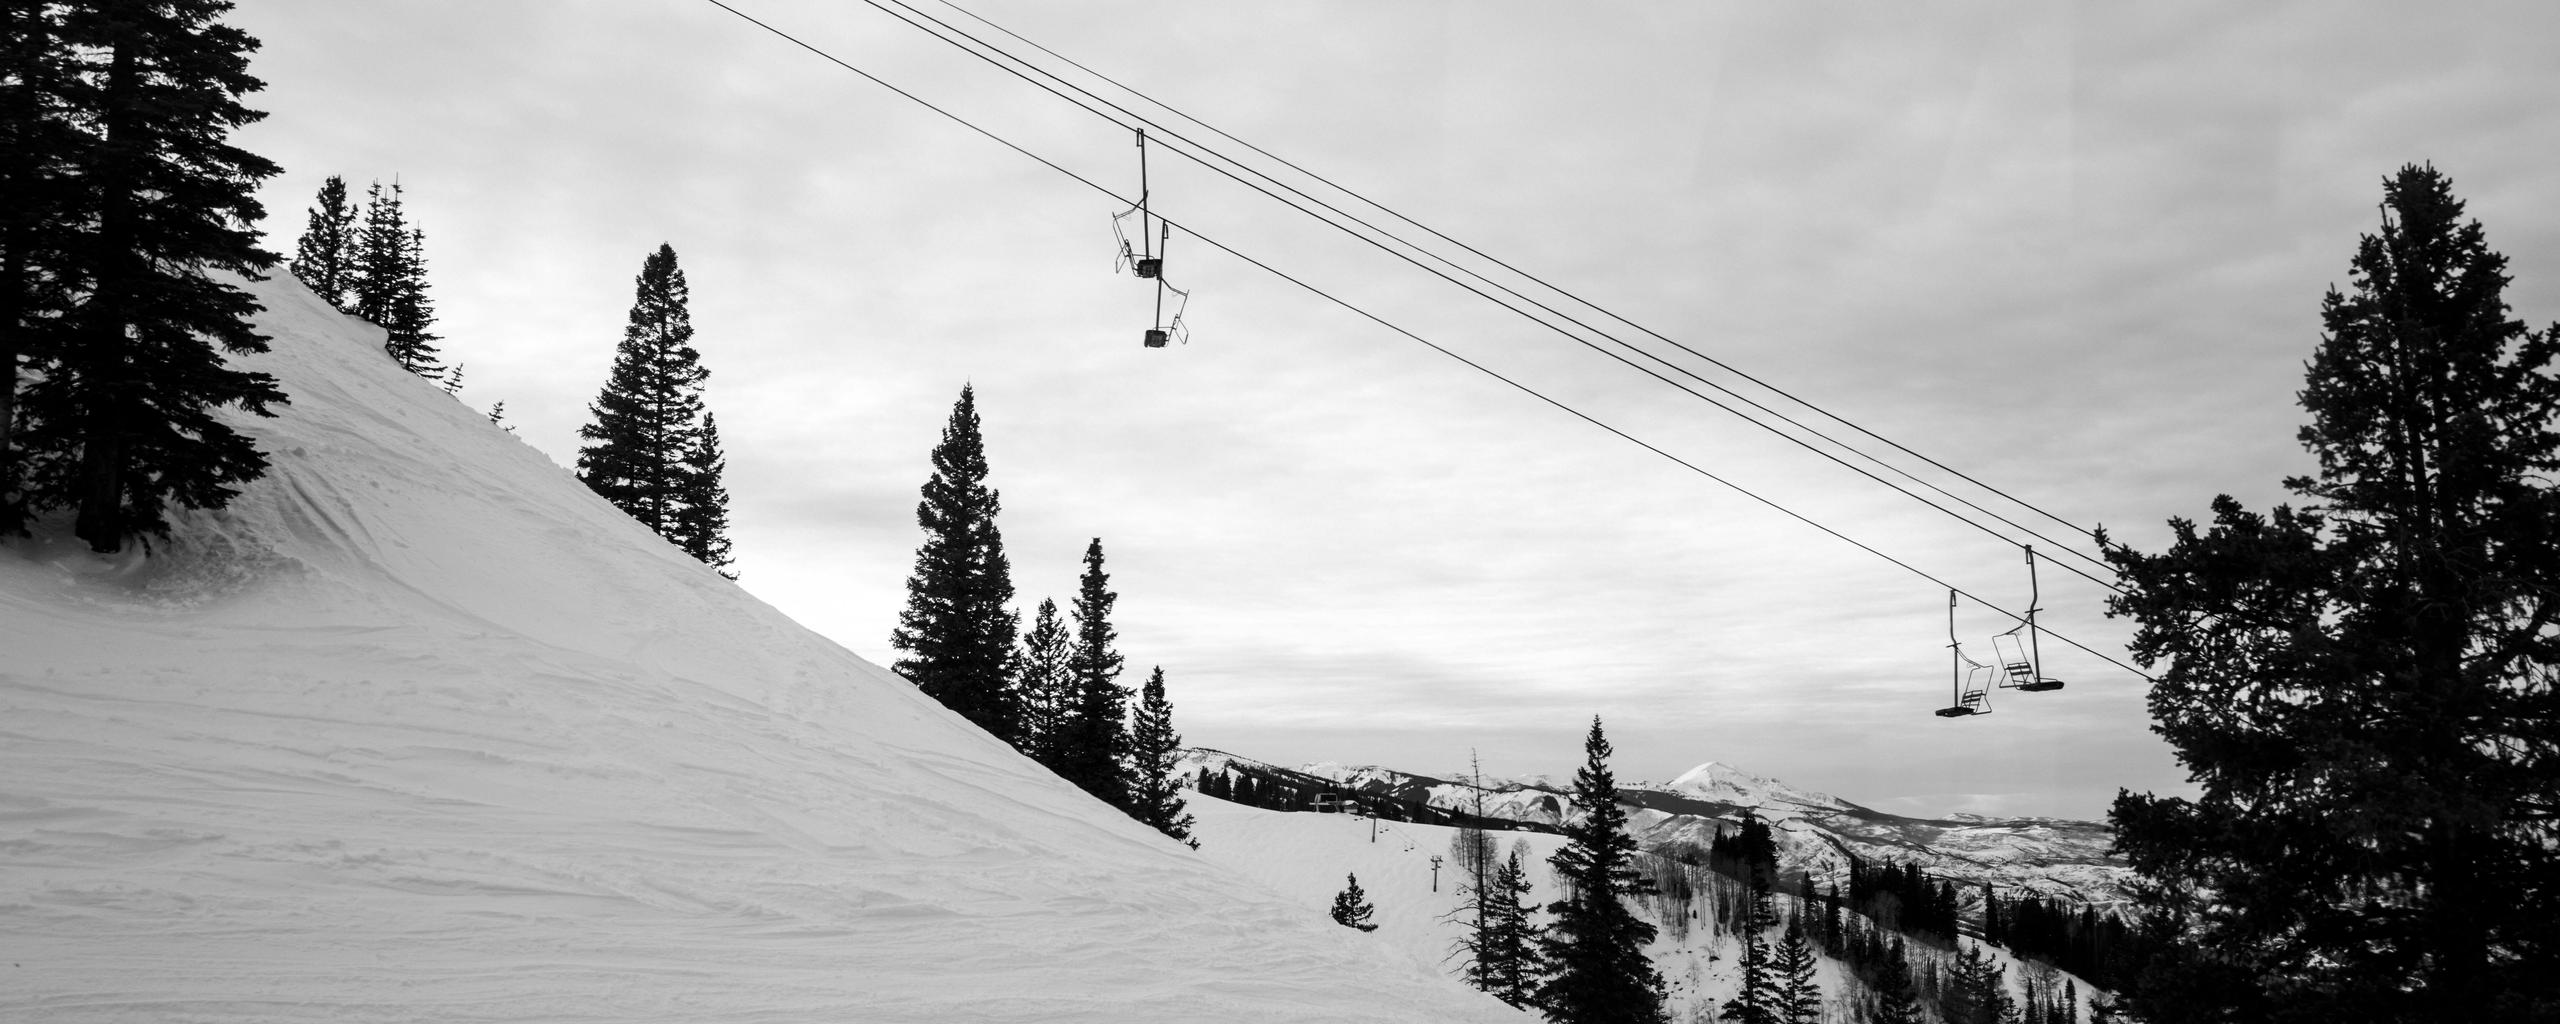 Ski lift in Aspen, Colorado